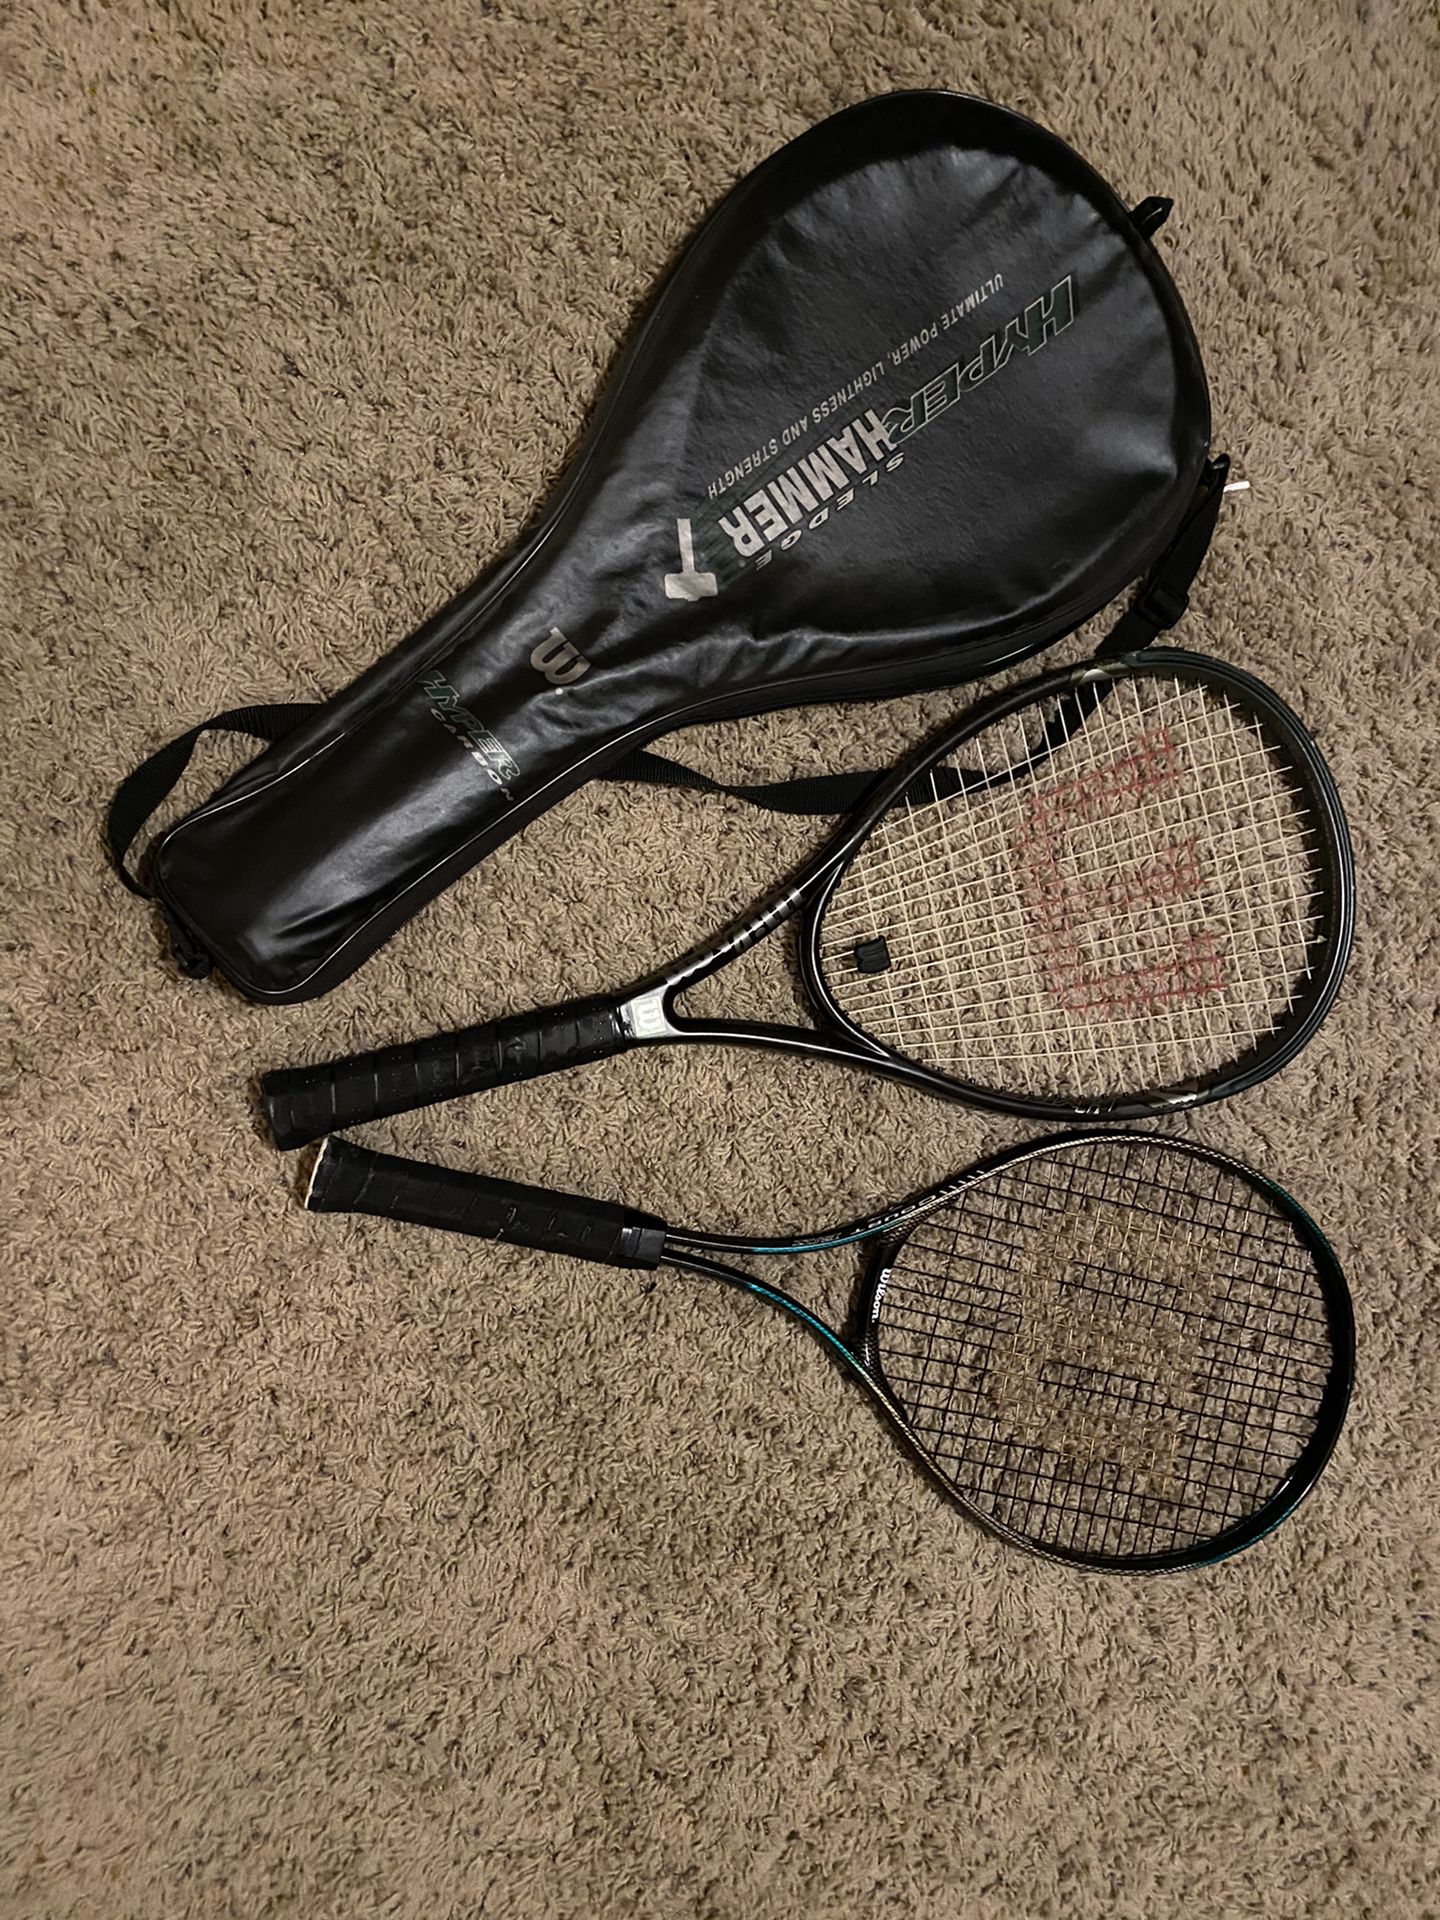 2 Wilson tennis racquets